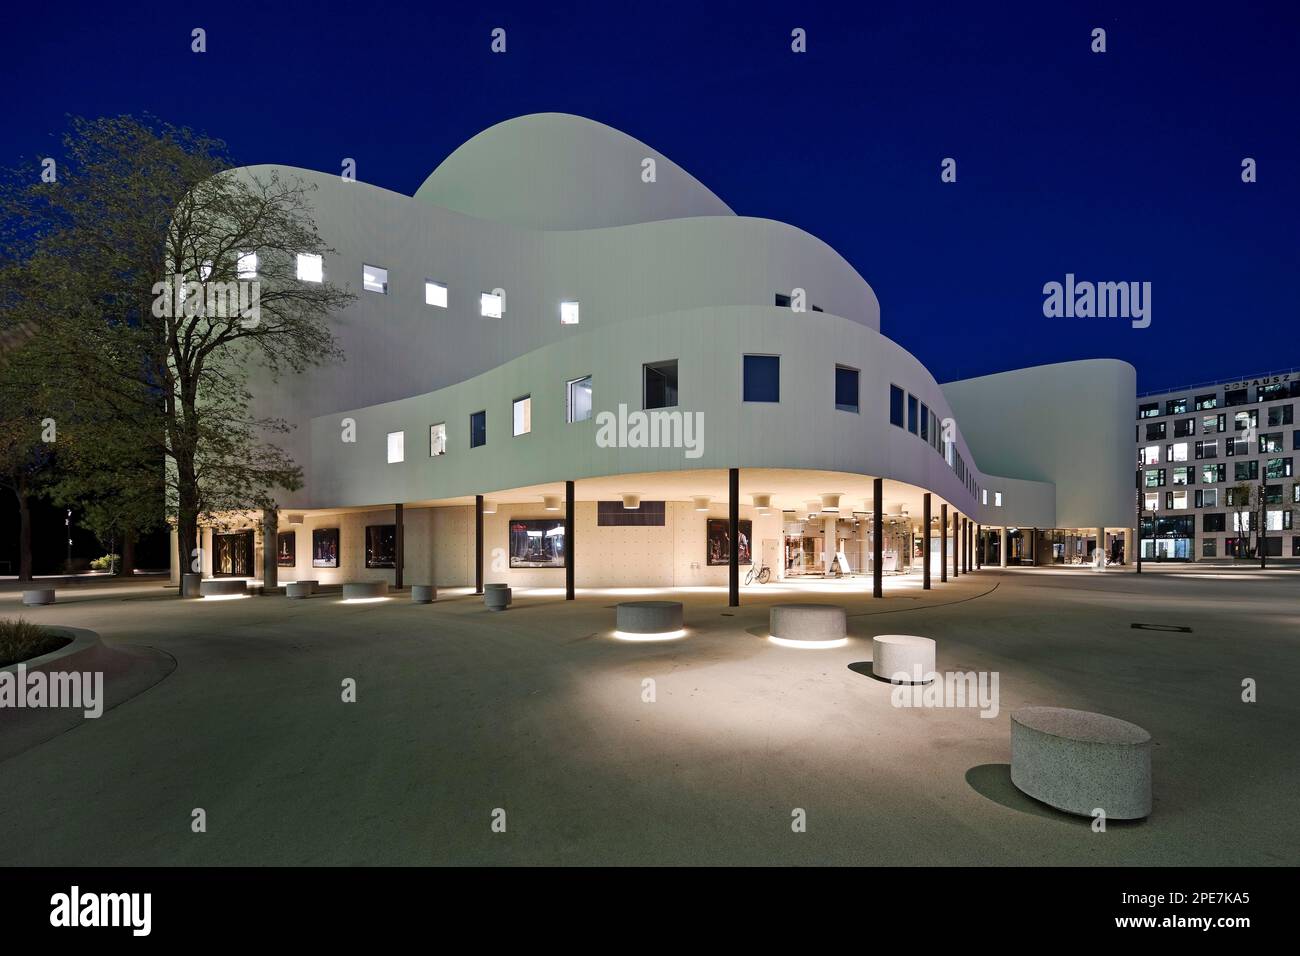 Duesseldorfer Schauspielhaus am Abend, abrégé Dhaus, Düsseldorf, Rhénanie-du-Nord-Westphalie, Allemagne Banque D'Images